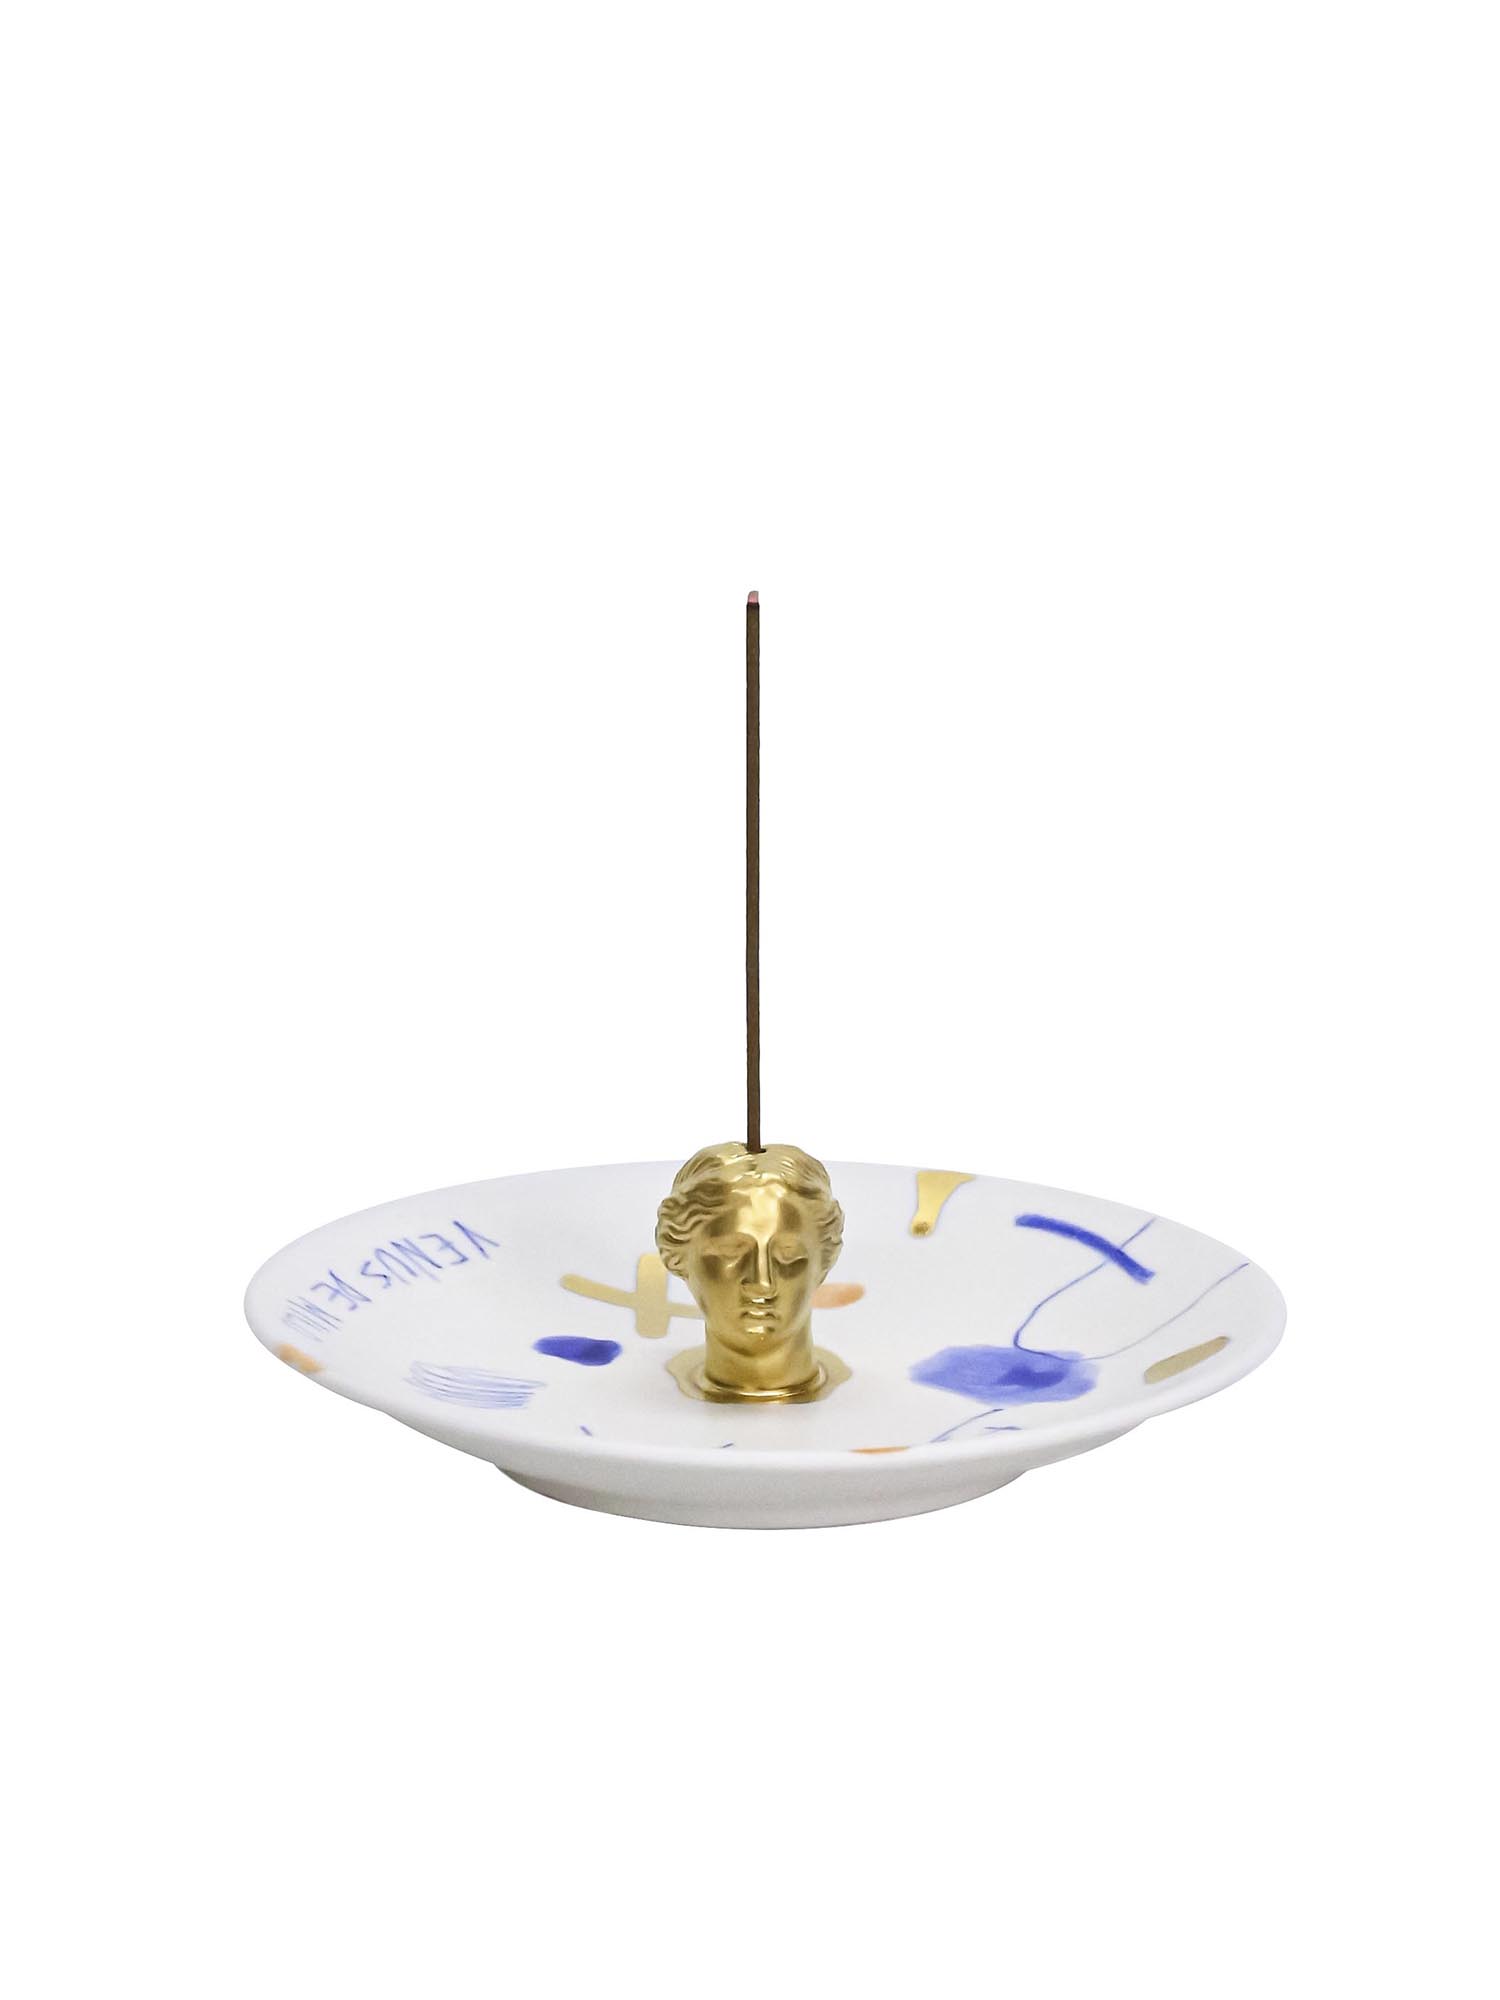 Venus Incense Holder - Drawing Gold Edition